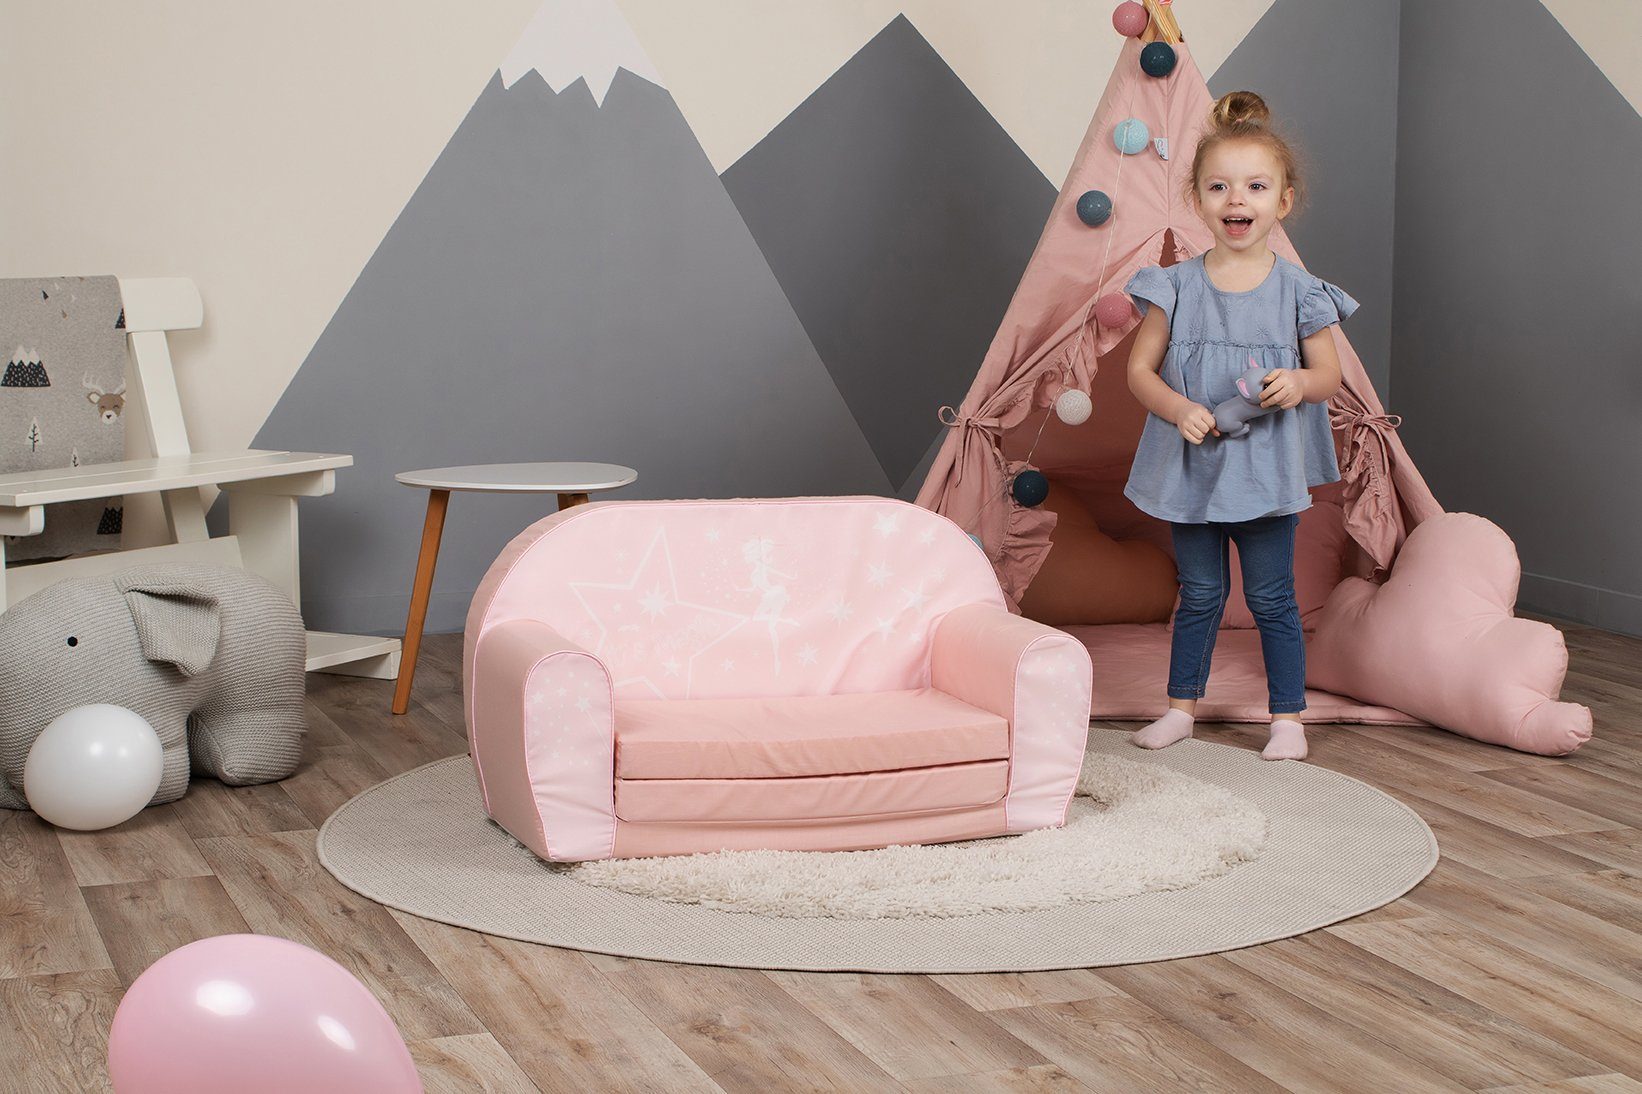 Kinder; Fairy in Knorrtoys® Sofa für Europe Made Pink,